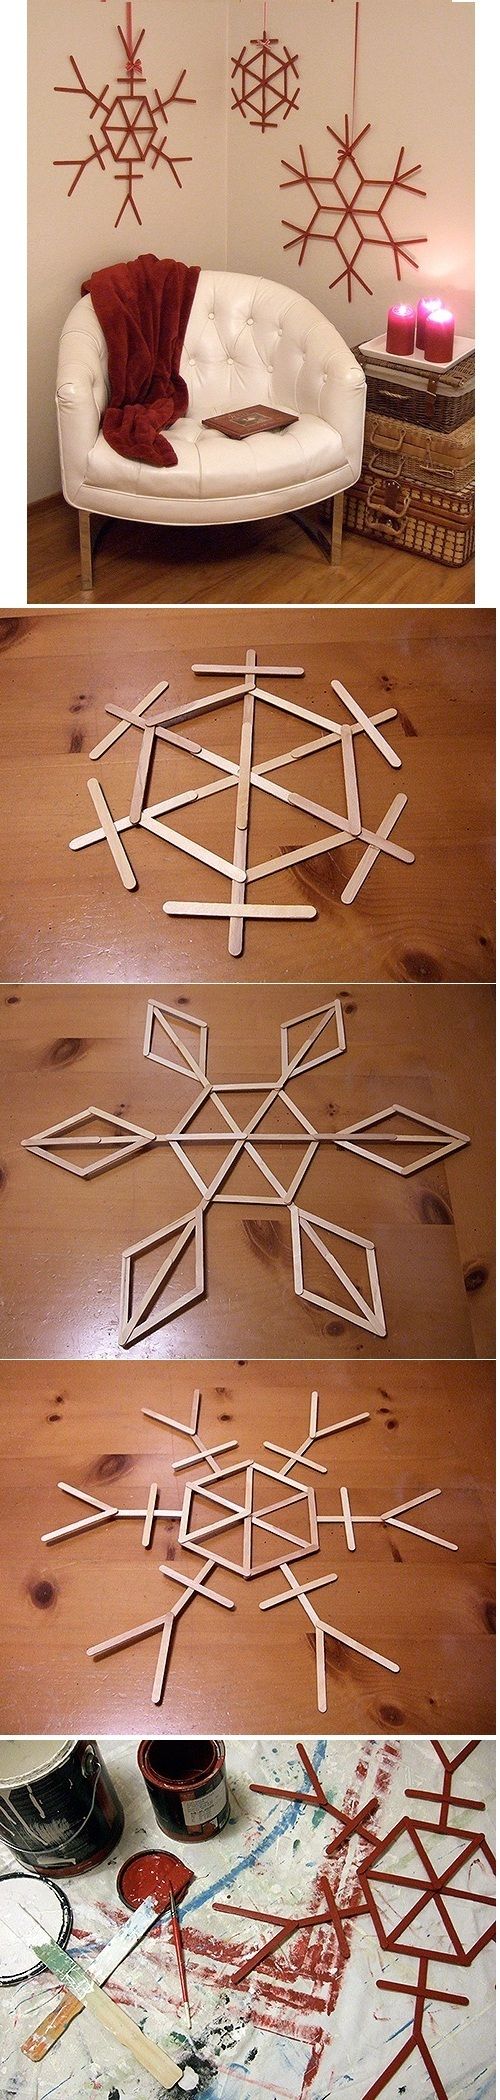 Popsicle-Stick Snowflakes